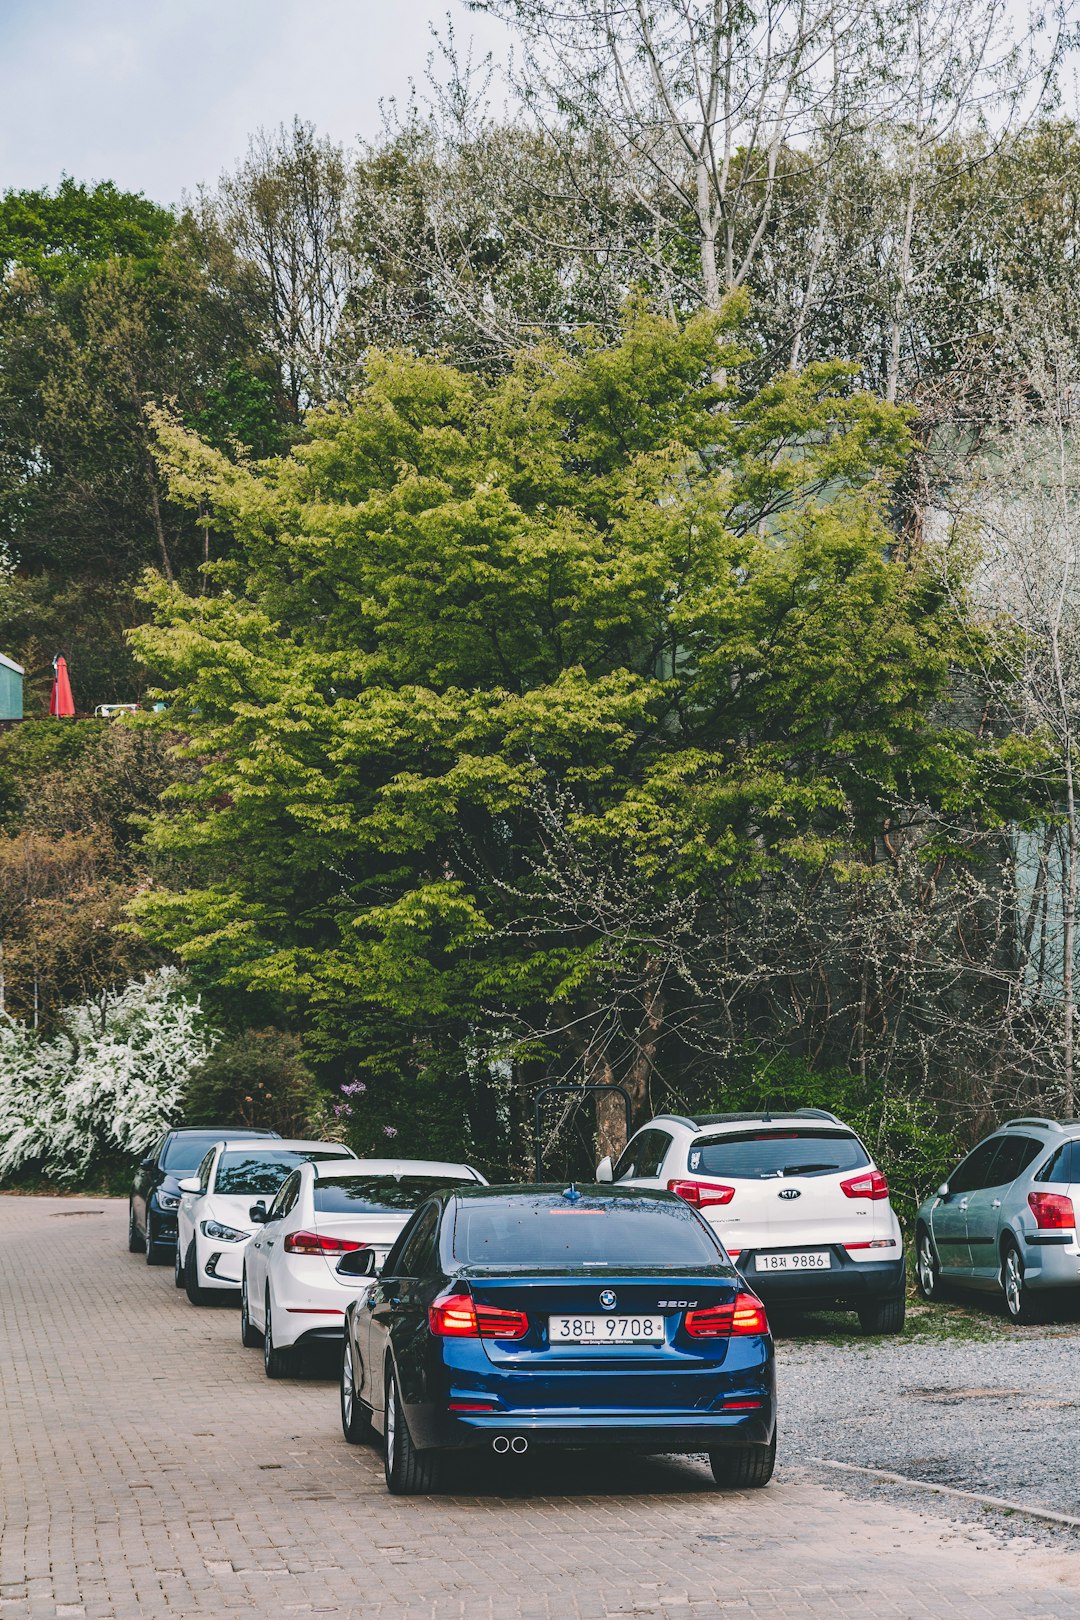 parked vehicles near trees